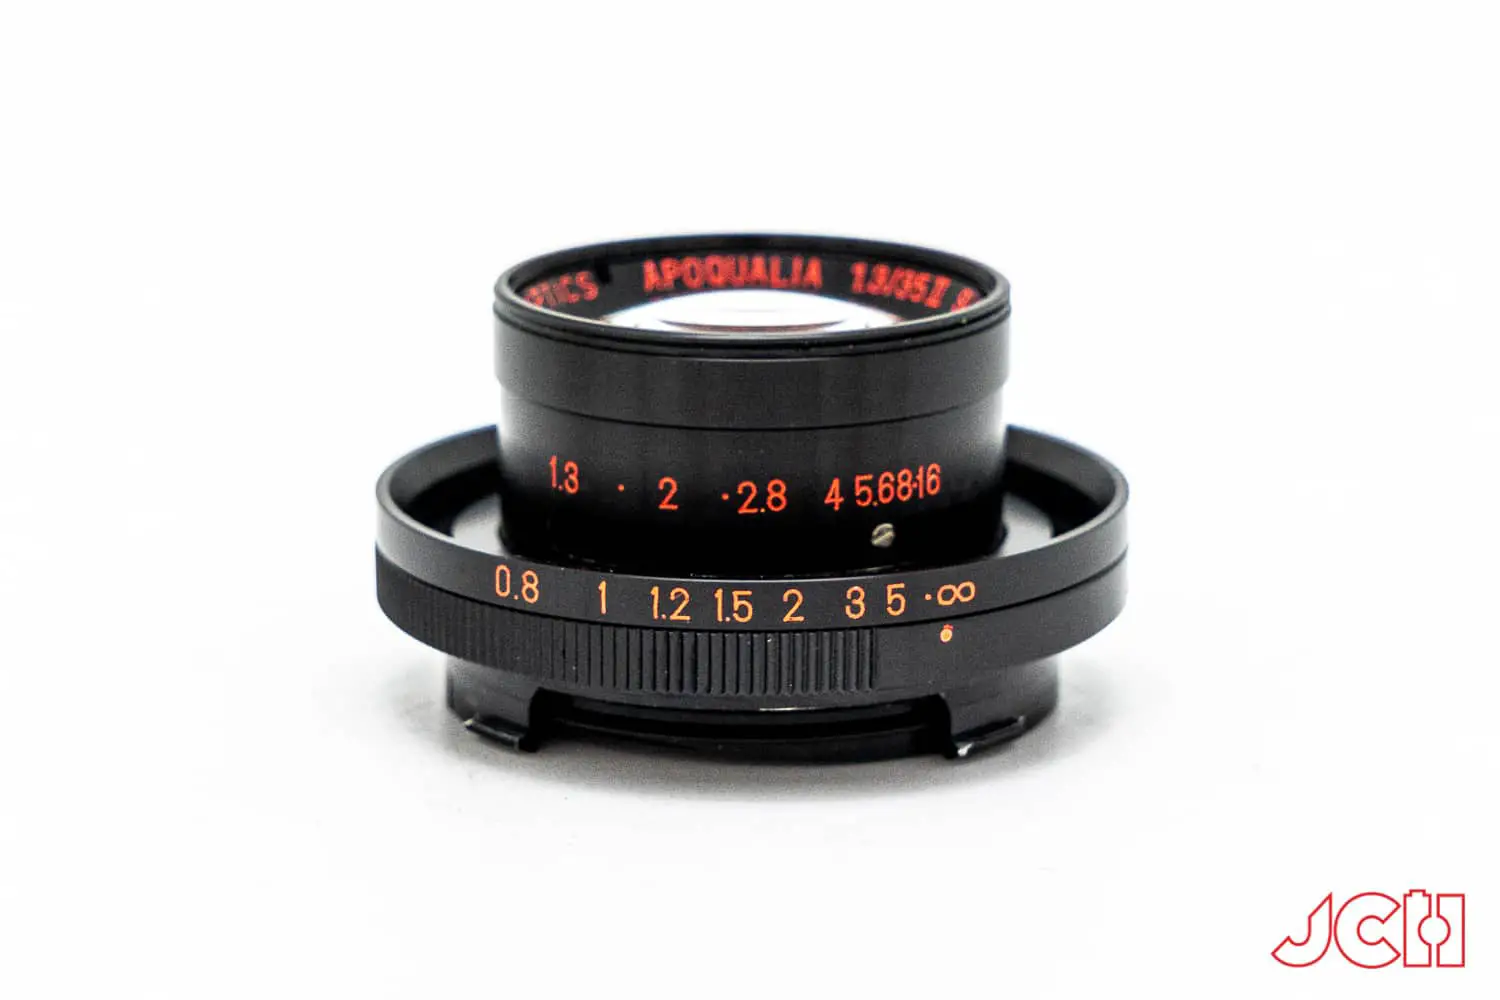 JCH 10 Year Edition MS Optics Apoqualia 35mm 1.3 - Japan Camera Hunter